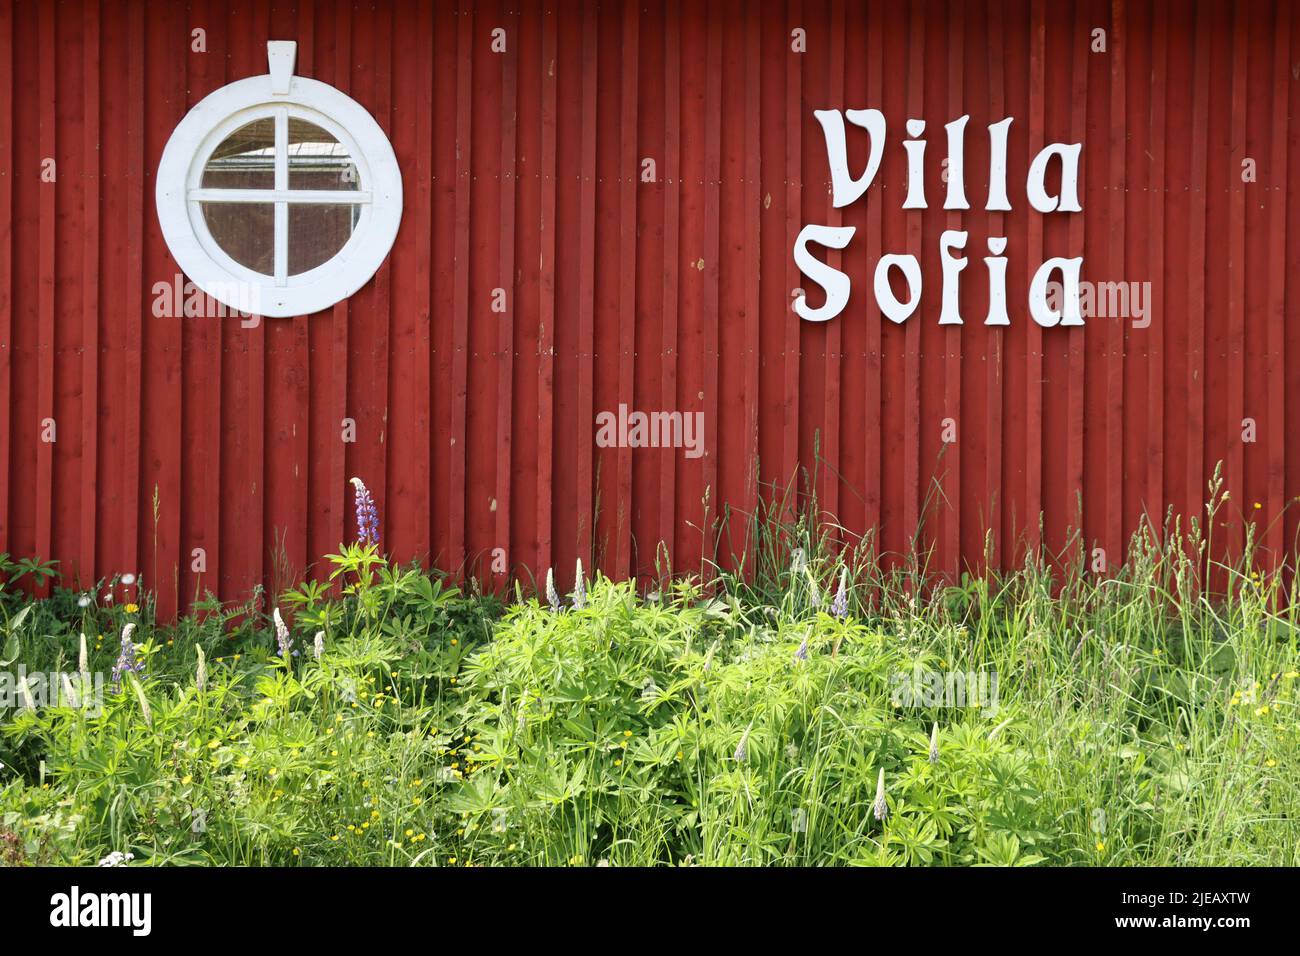 Villa Sofia on Barösund island, Inkoo, Finland Stock Photo